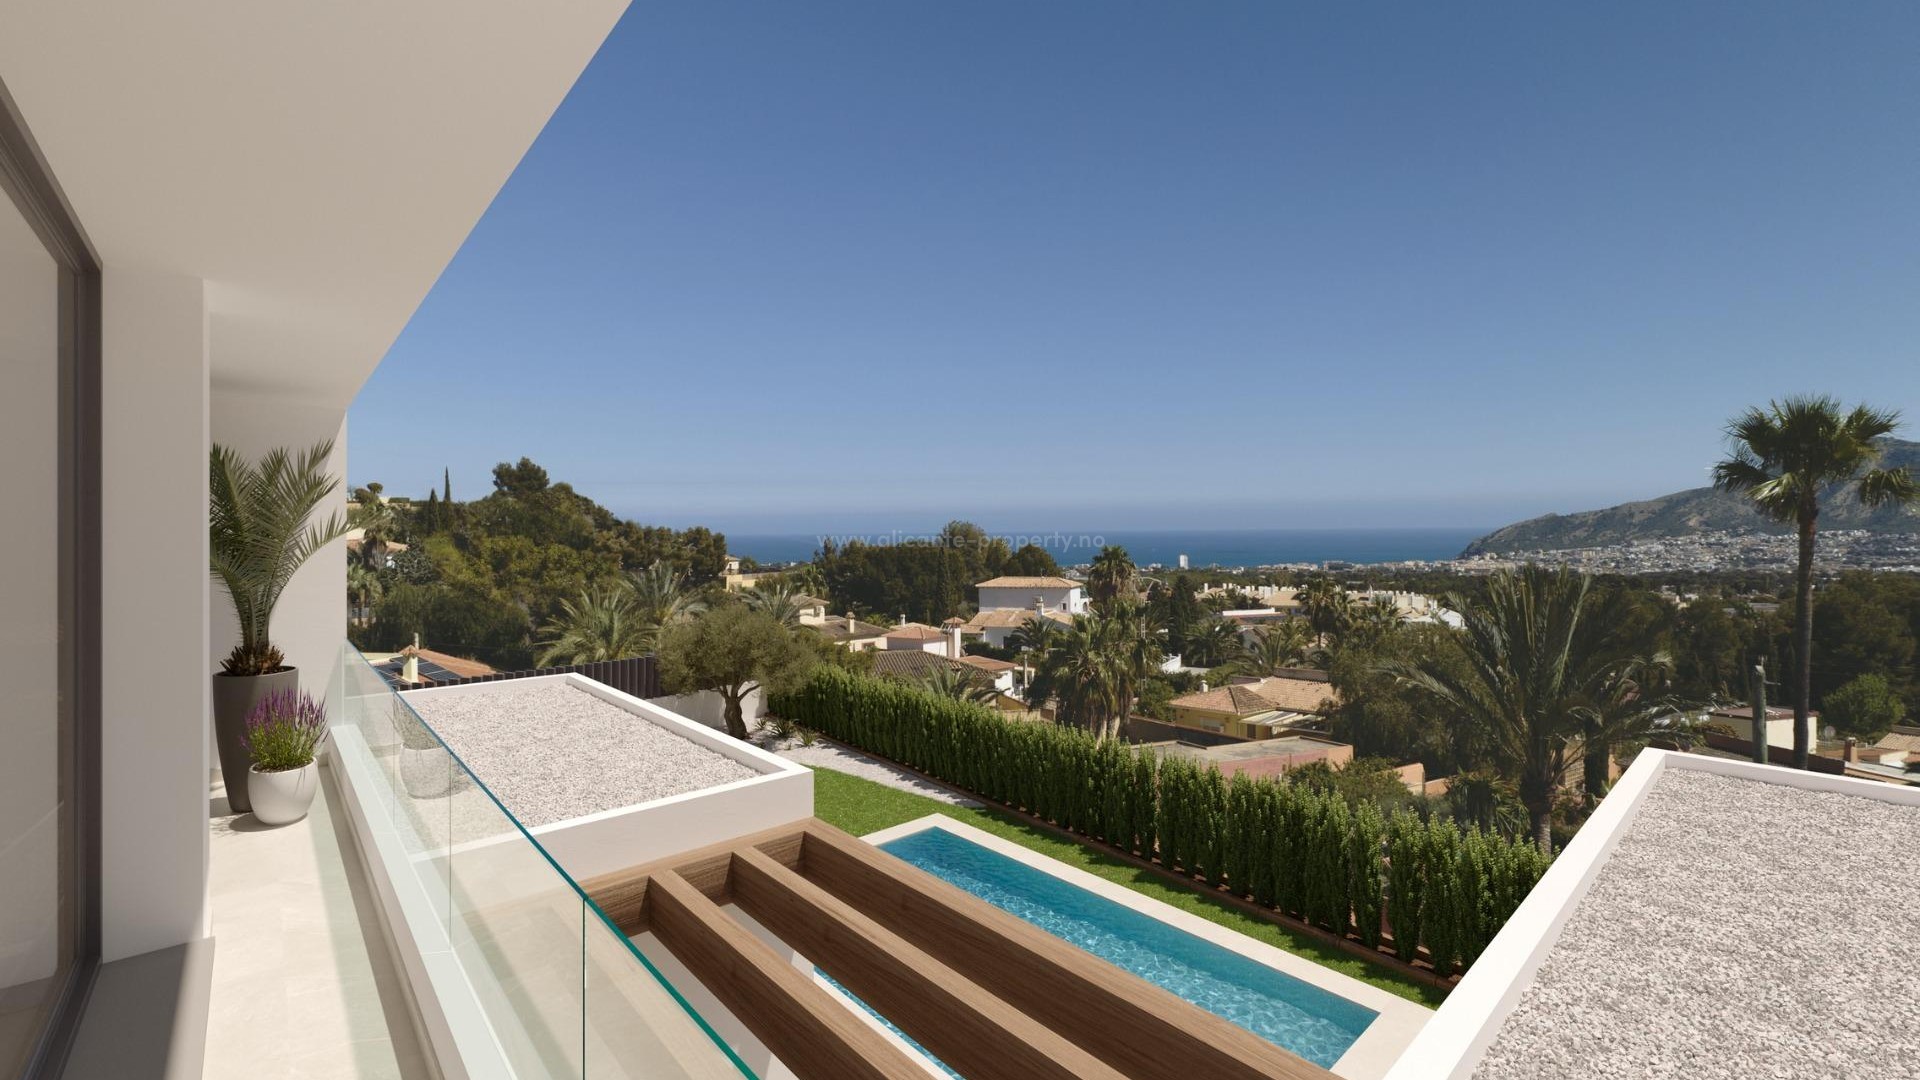 12 newly built villas/houses in Alfaz del Pi, 3 bedrooms, 2 bathrooms, garden with swimming pool, fantastic views of the Mediterranean